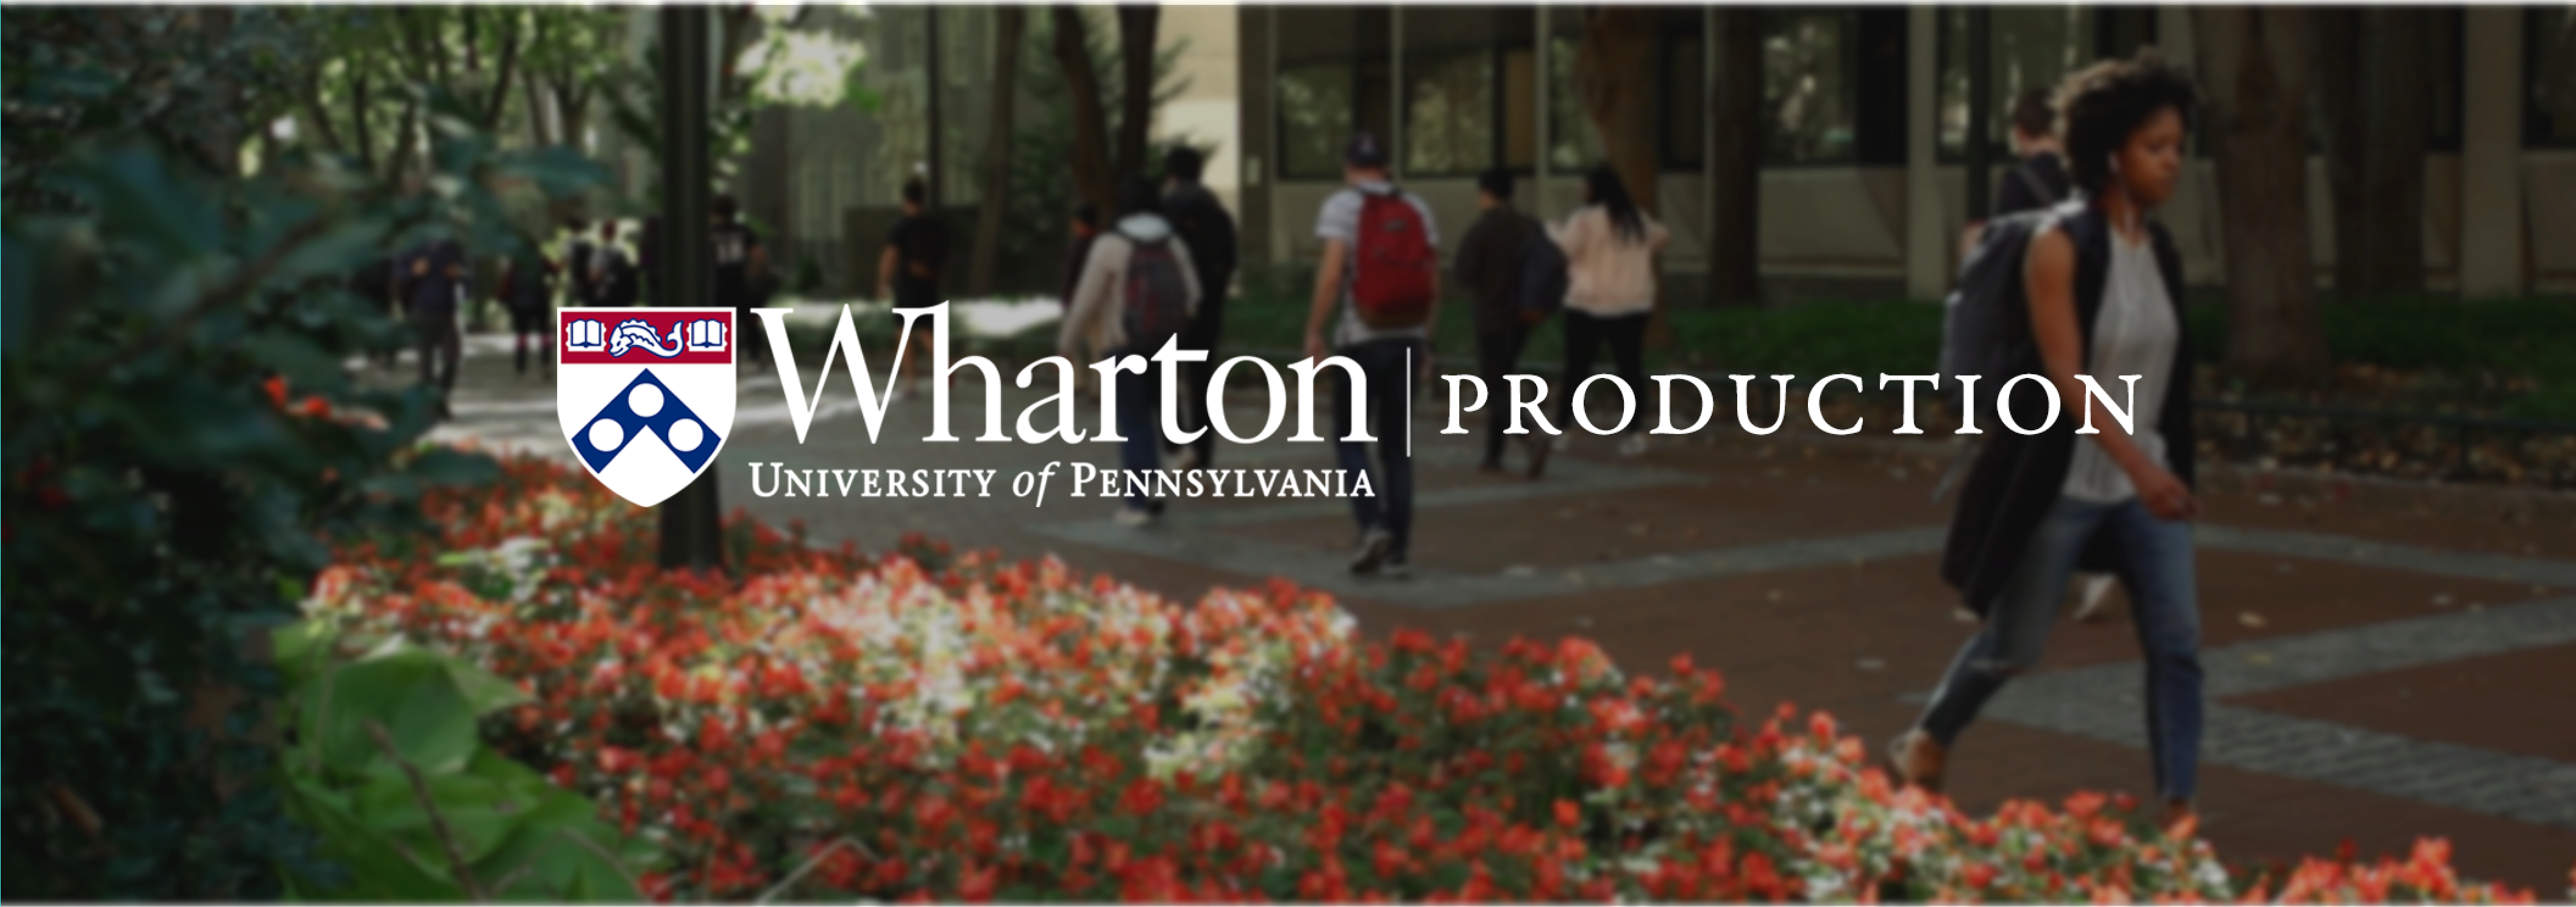 Wharton Production